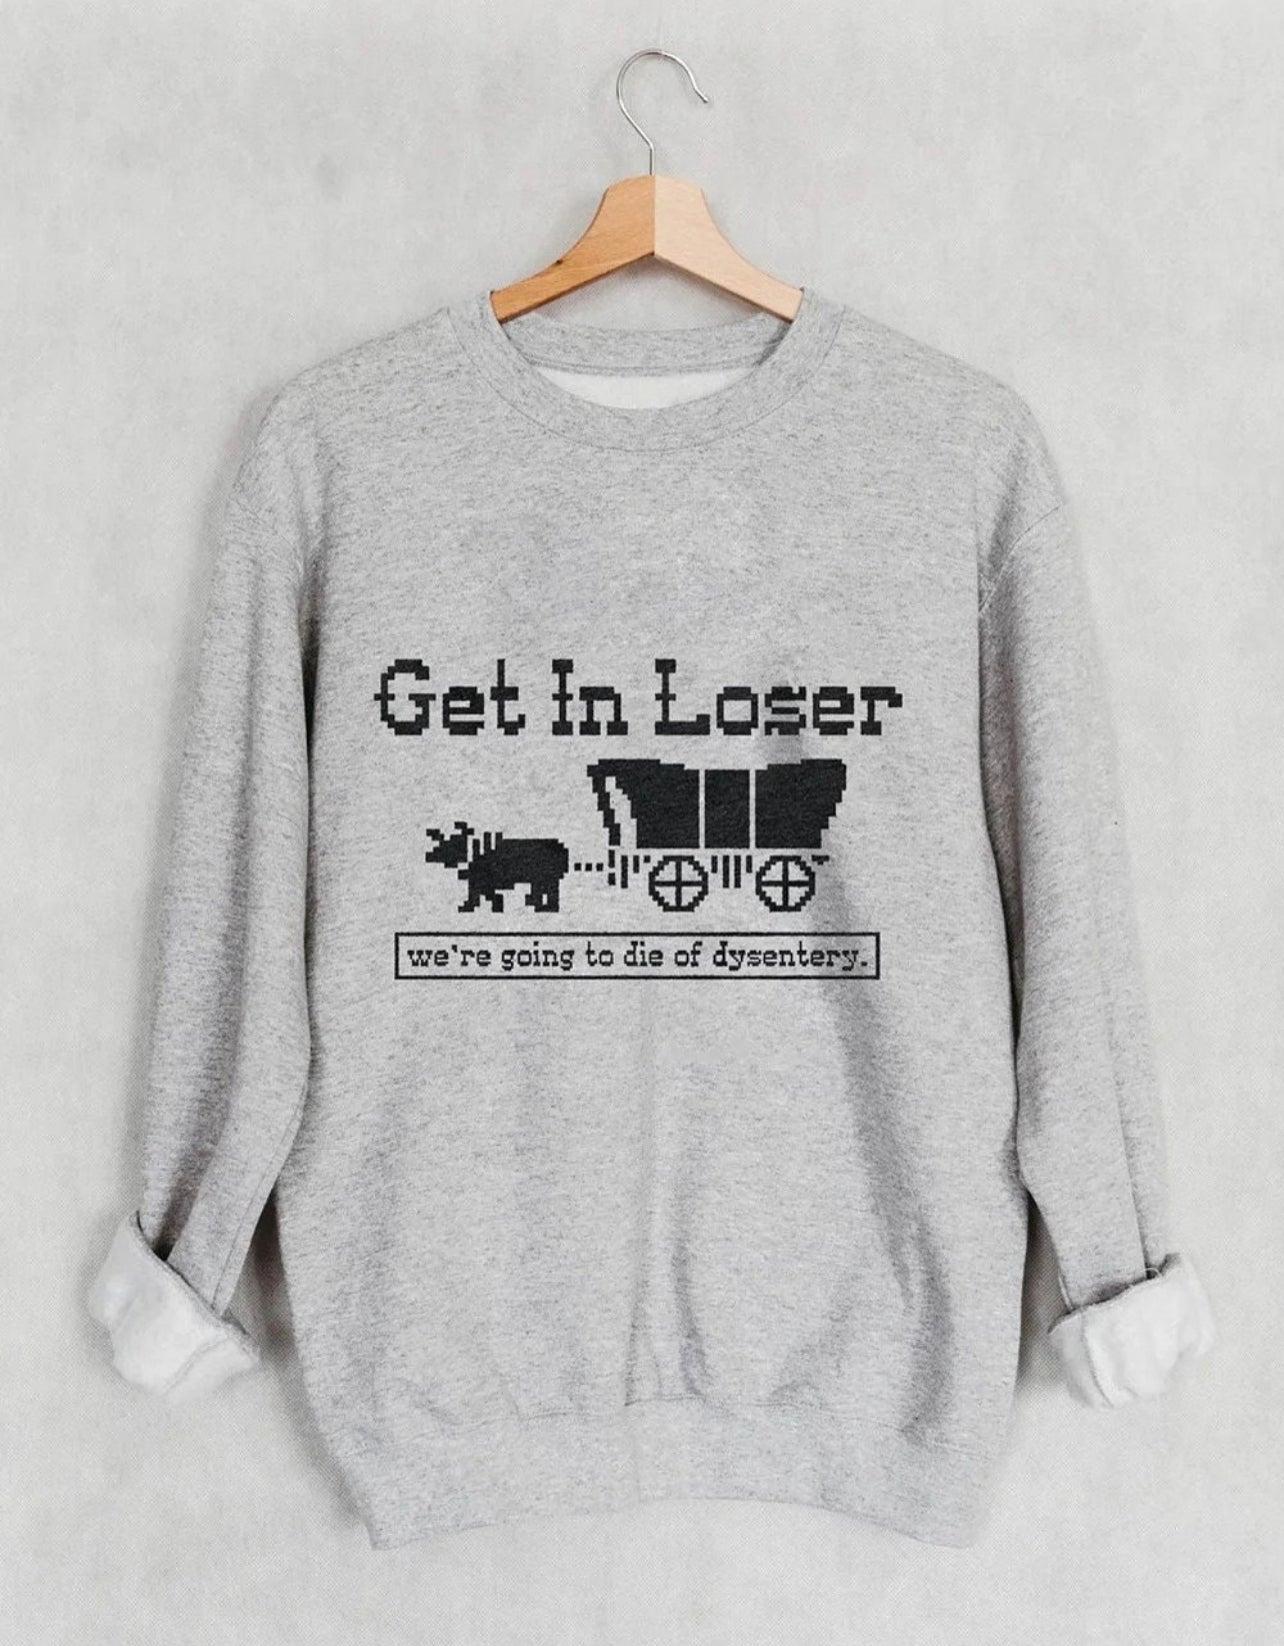 Get In Loser-Oregon Trail Crewneck Sweatshirt or Tee